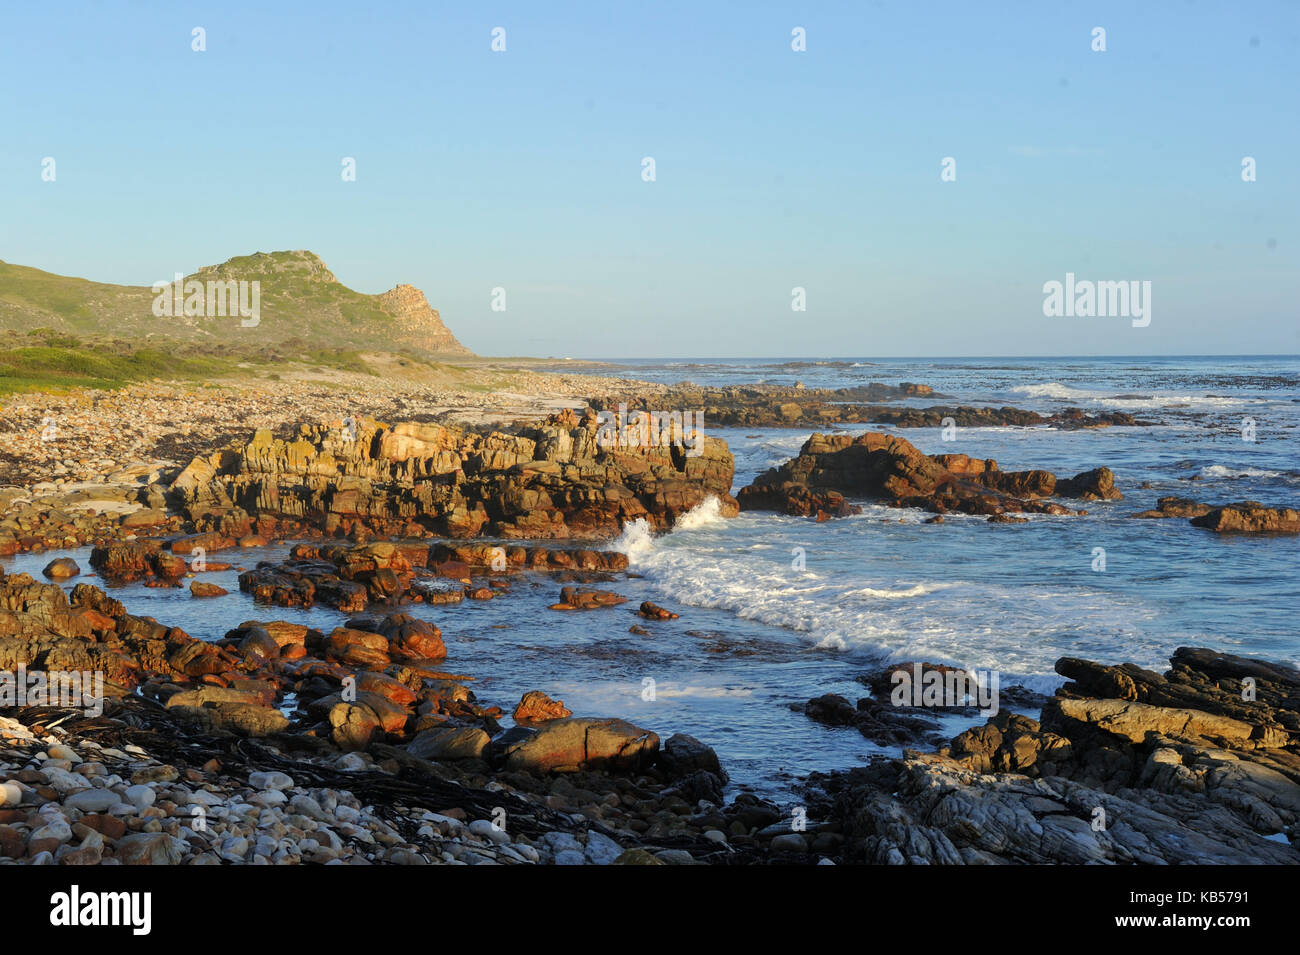 South Africa, Western Cape, Cape Peninsula, Cape of Good Hope Nature Reserve, Cape of Good Hope Stock Photo